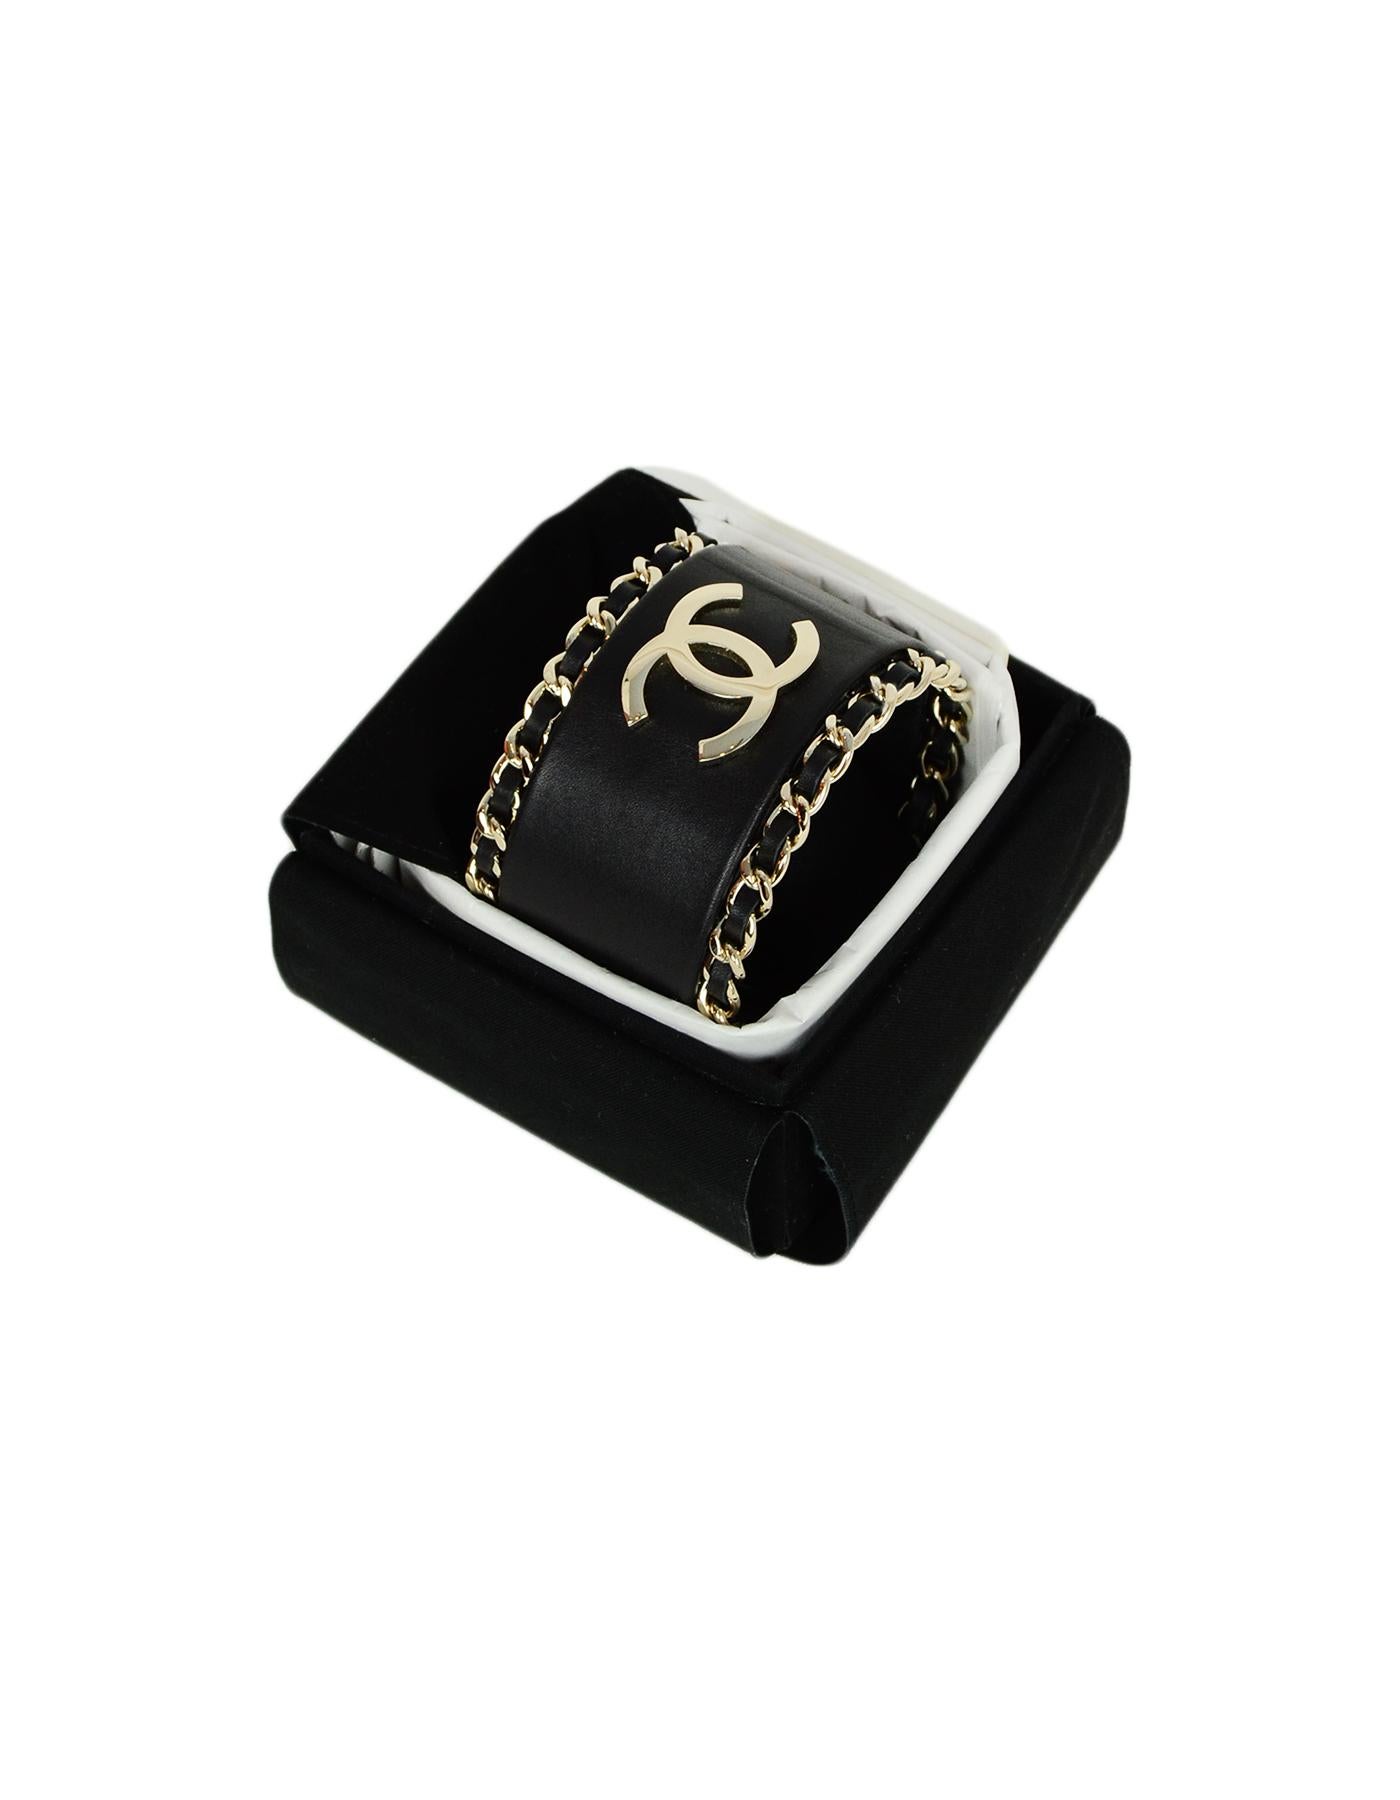 Women's Chanel Black Leather CC Cuff Bracelet w/ Leather Laced Chain Trim